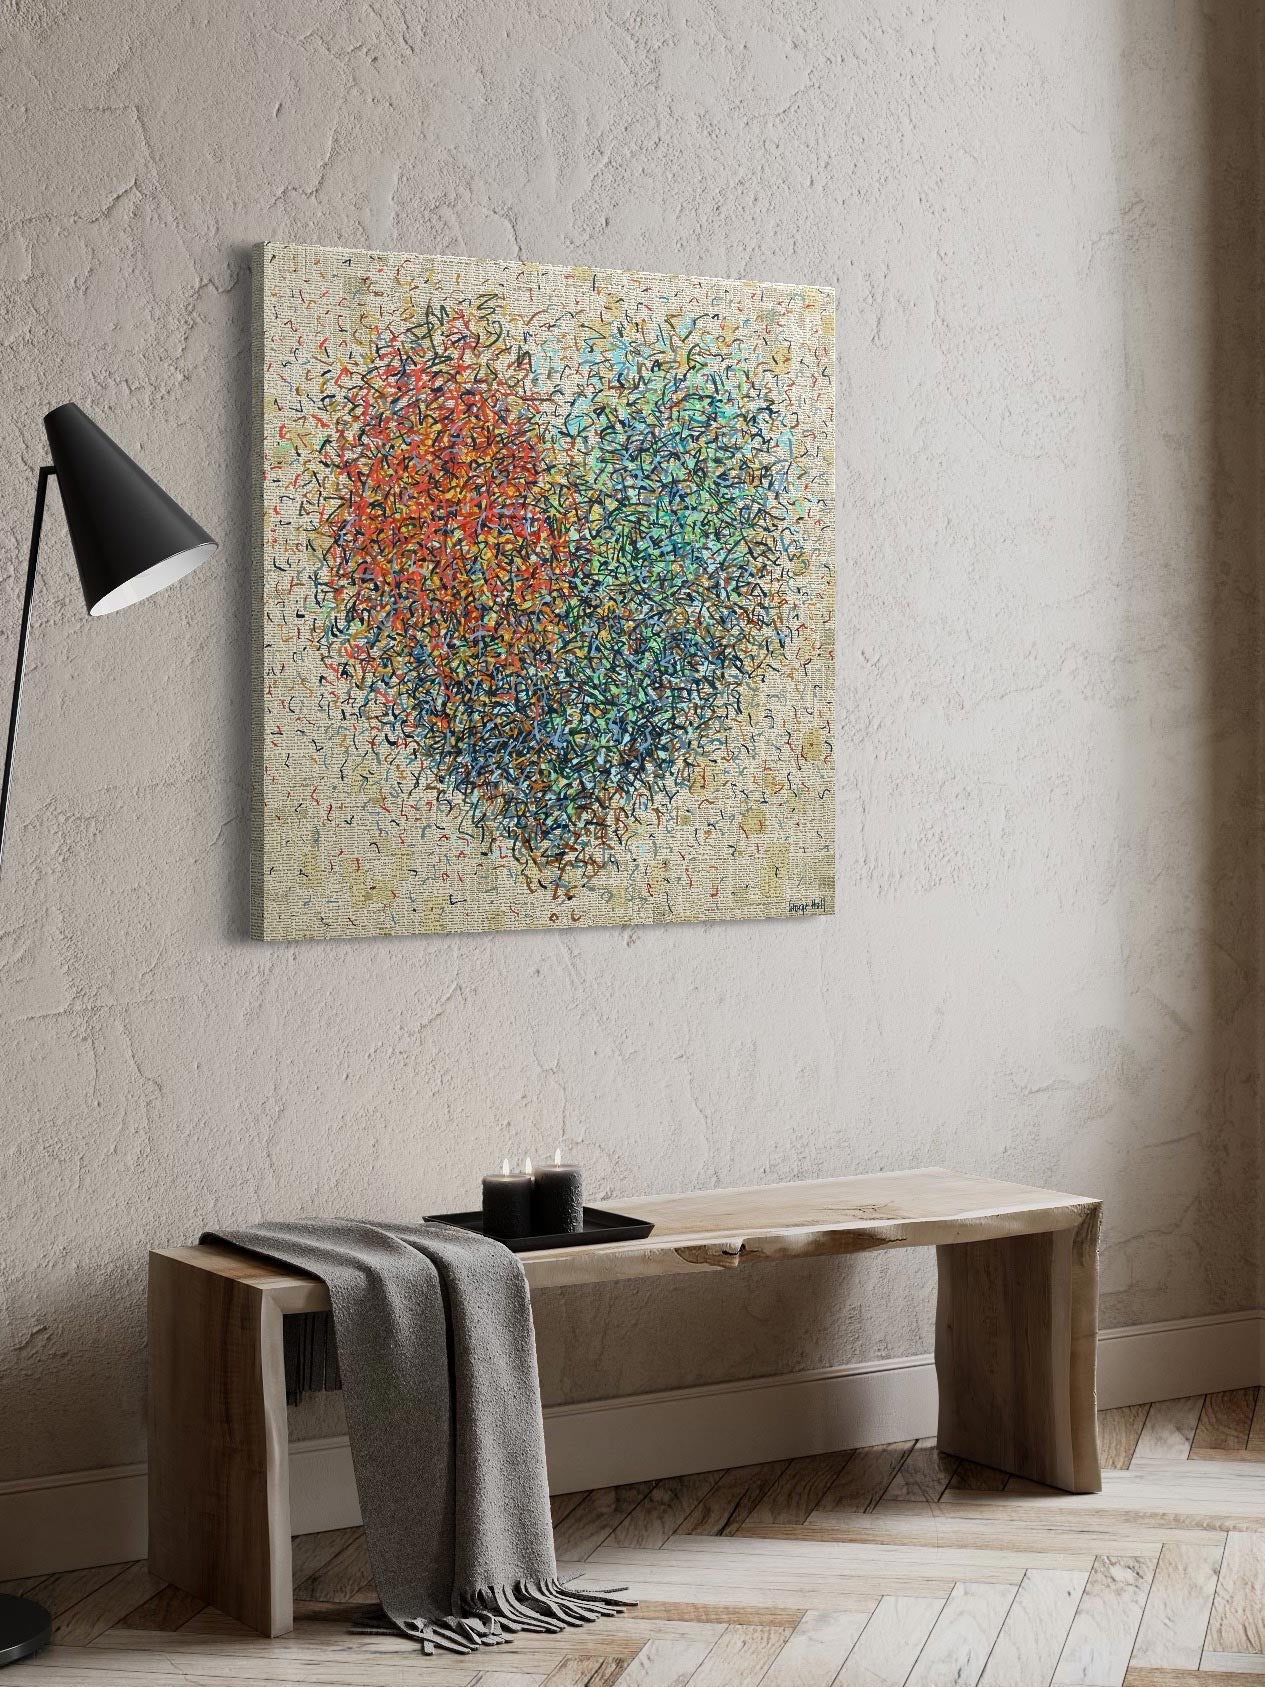 Sepia Optimist - 101 x 101cm - mixed media on canvas